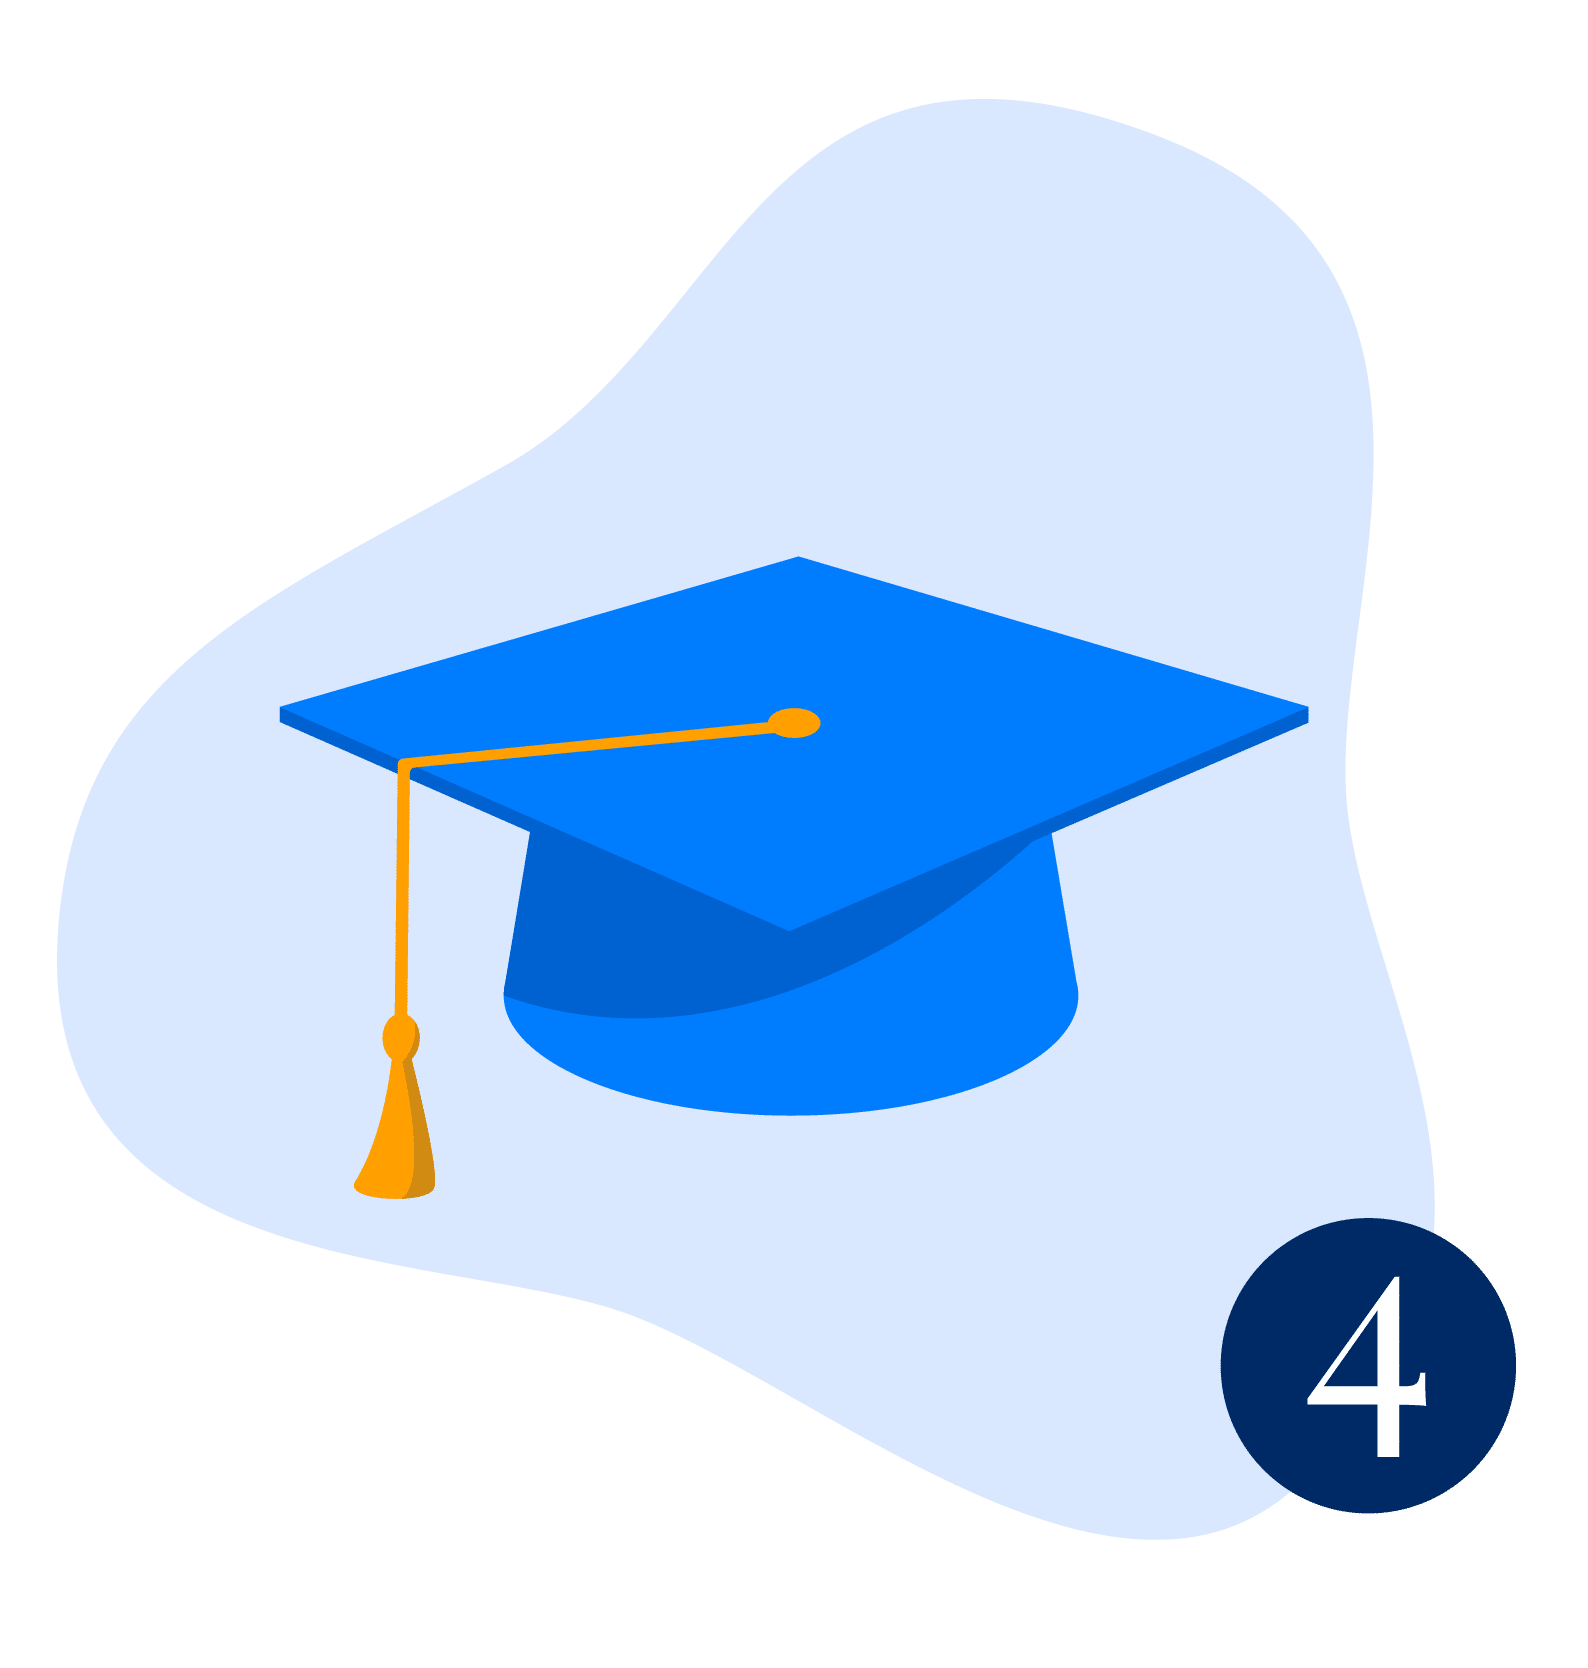 Training your CoPilots, Illustration of a graduation cap